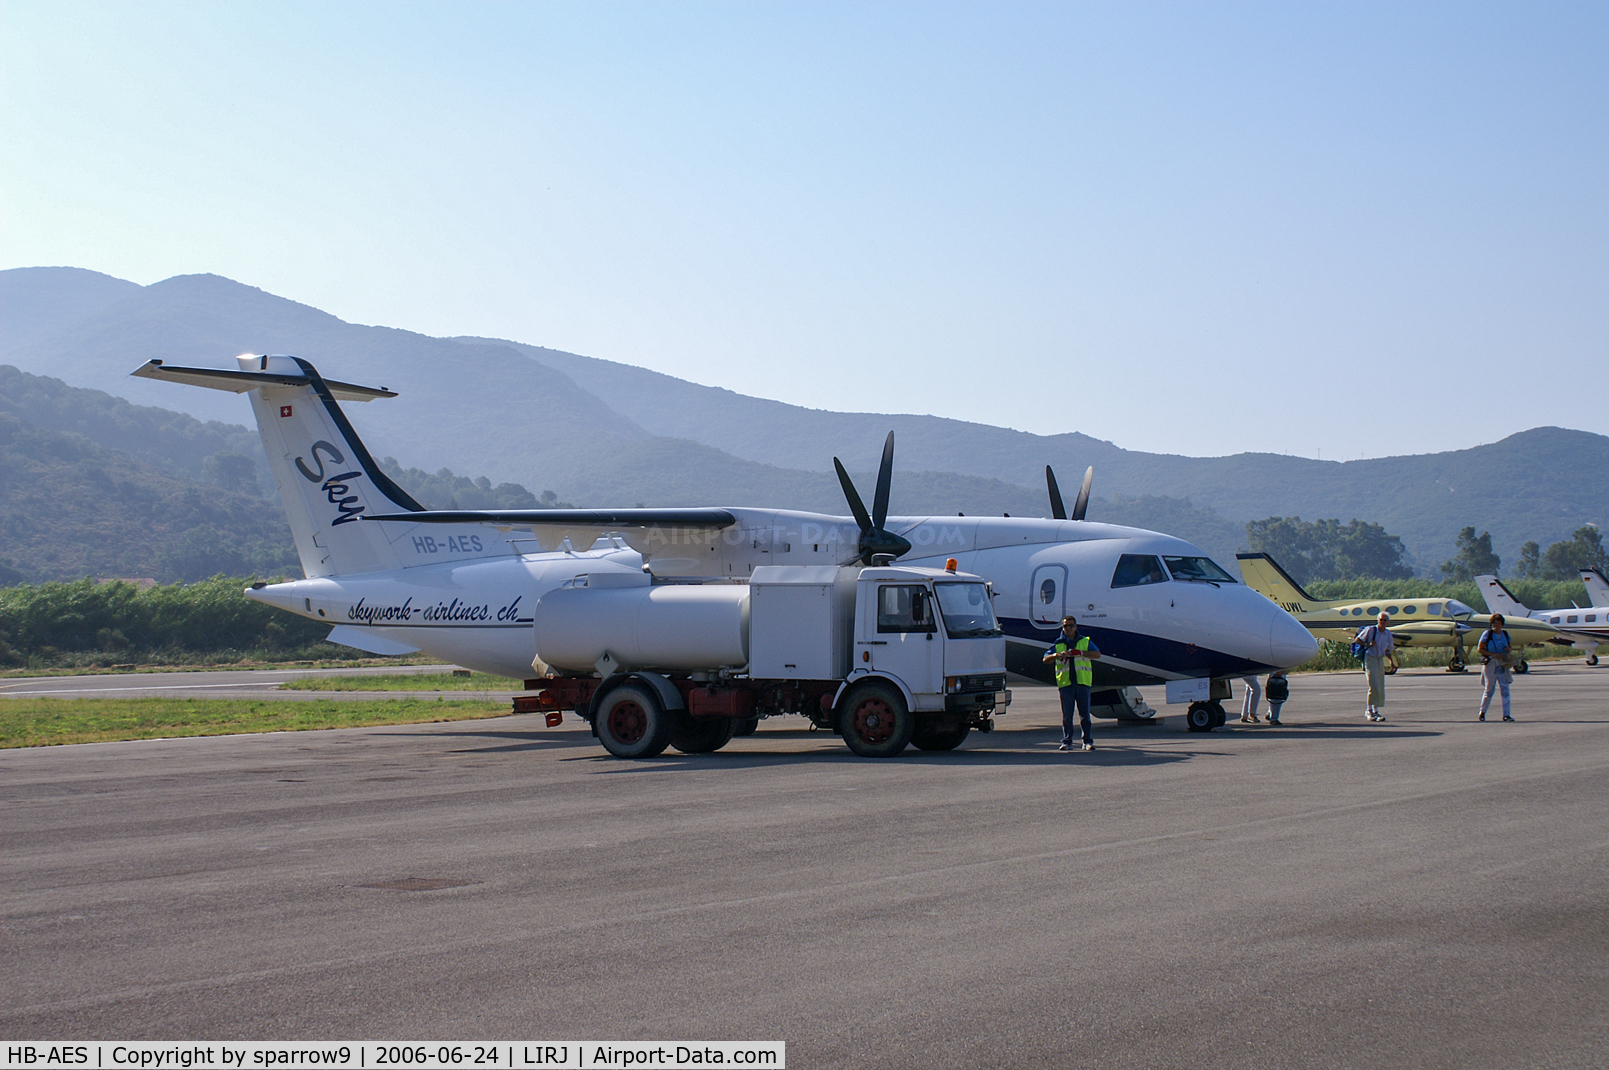 HB-AES, 1995 Dornier 328-110 C/N 3021, At Elba-Marina-di-Campo